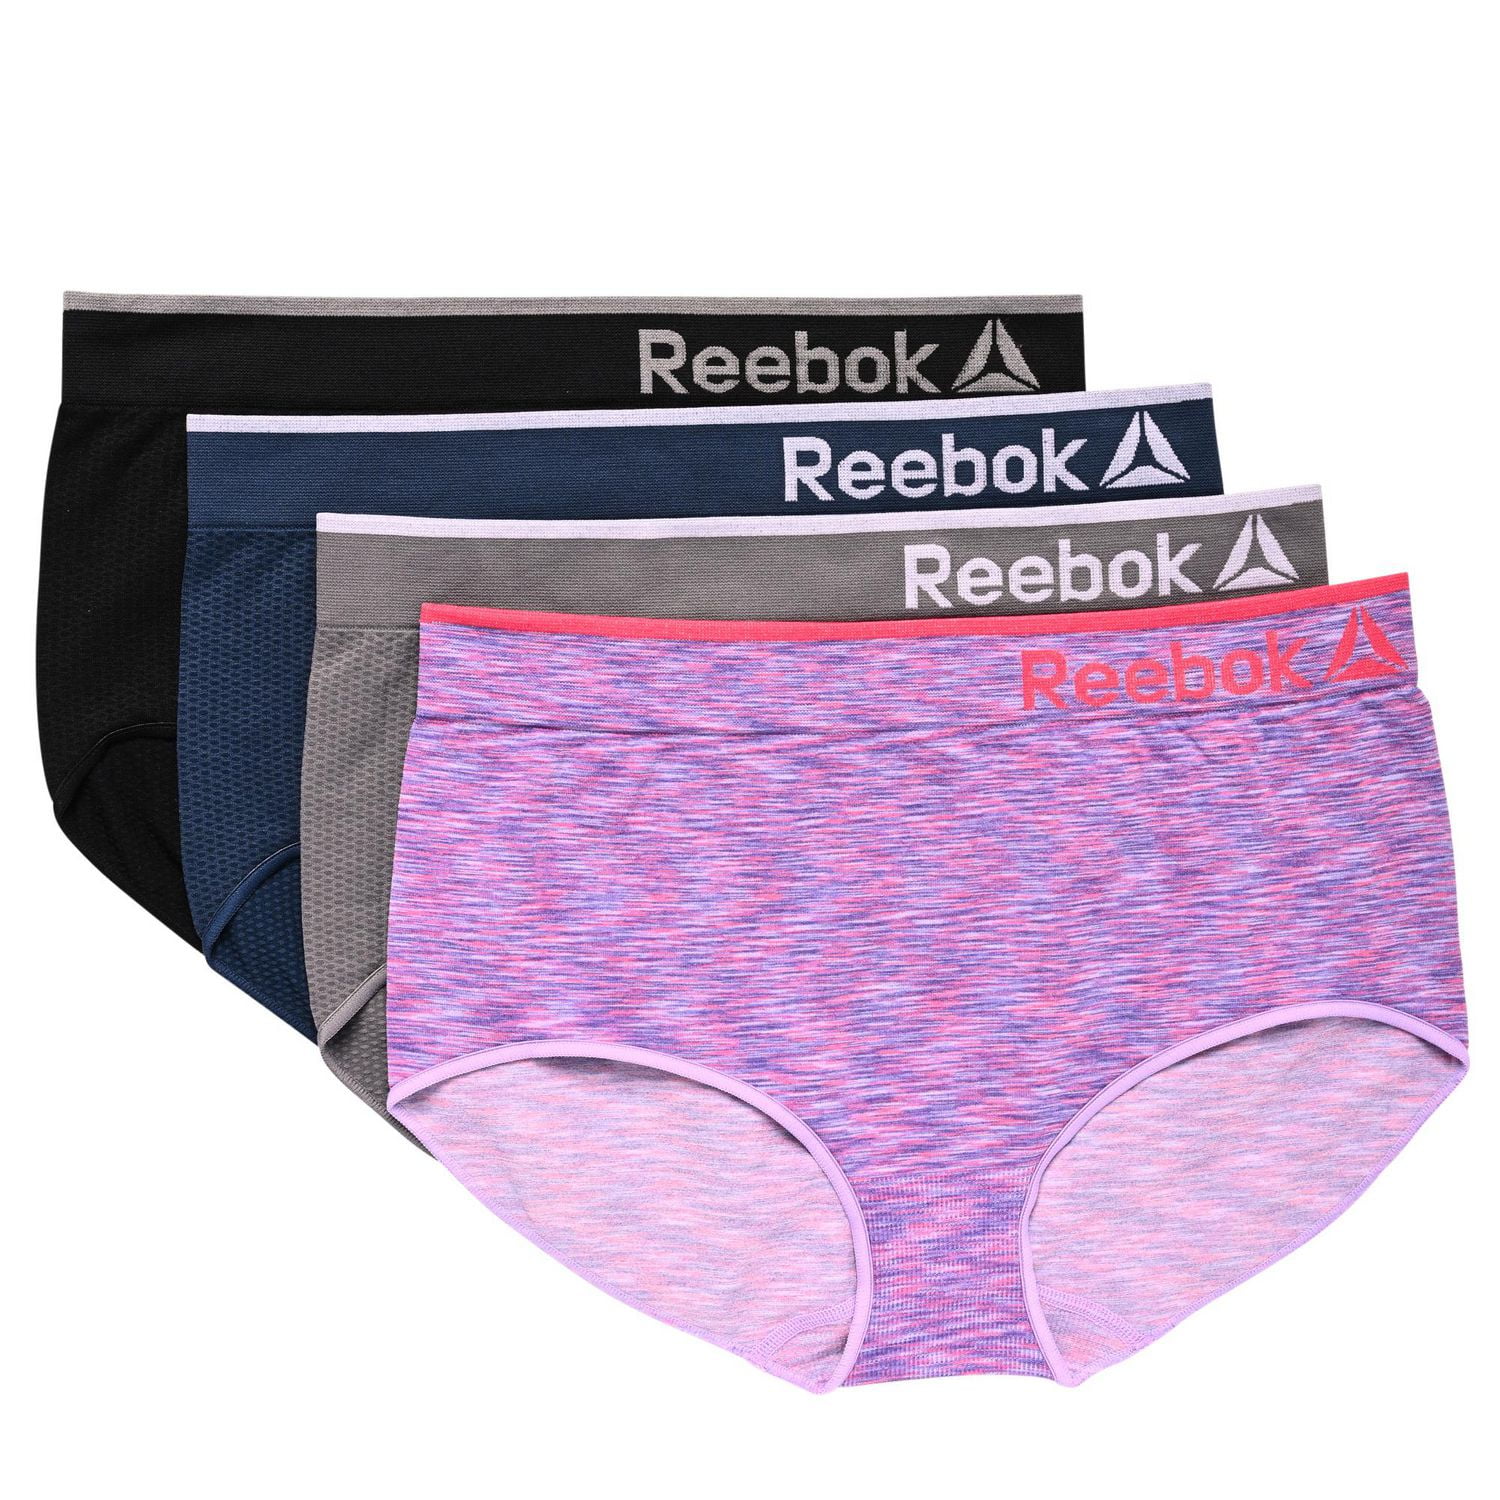 Reebok Women's Underwear - Seamless High Waist Brief Panties (3 Pack)